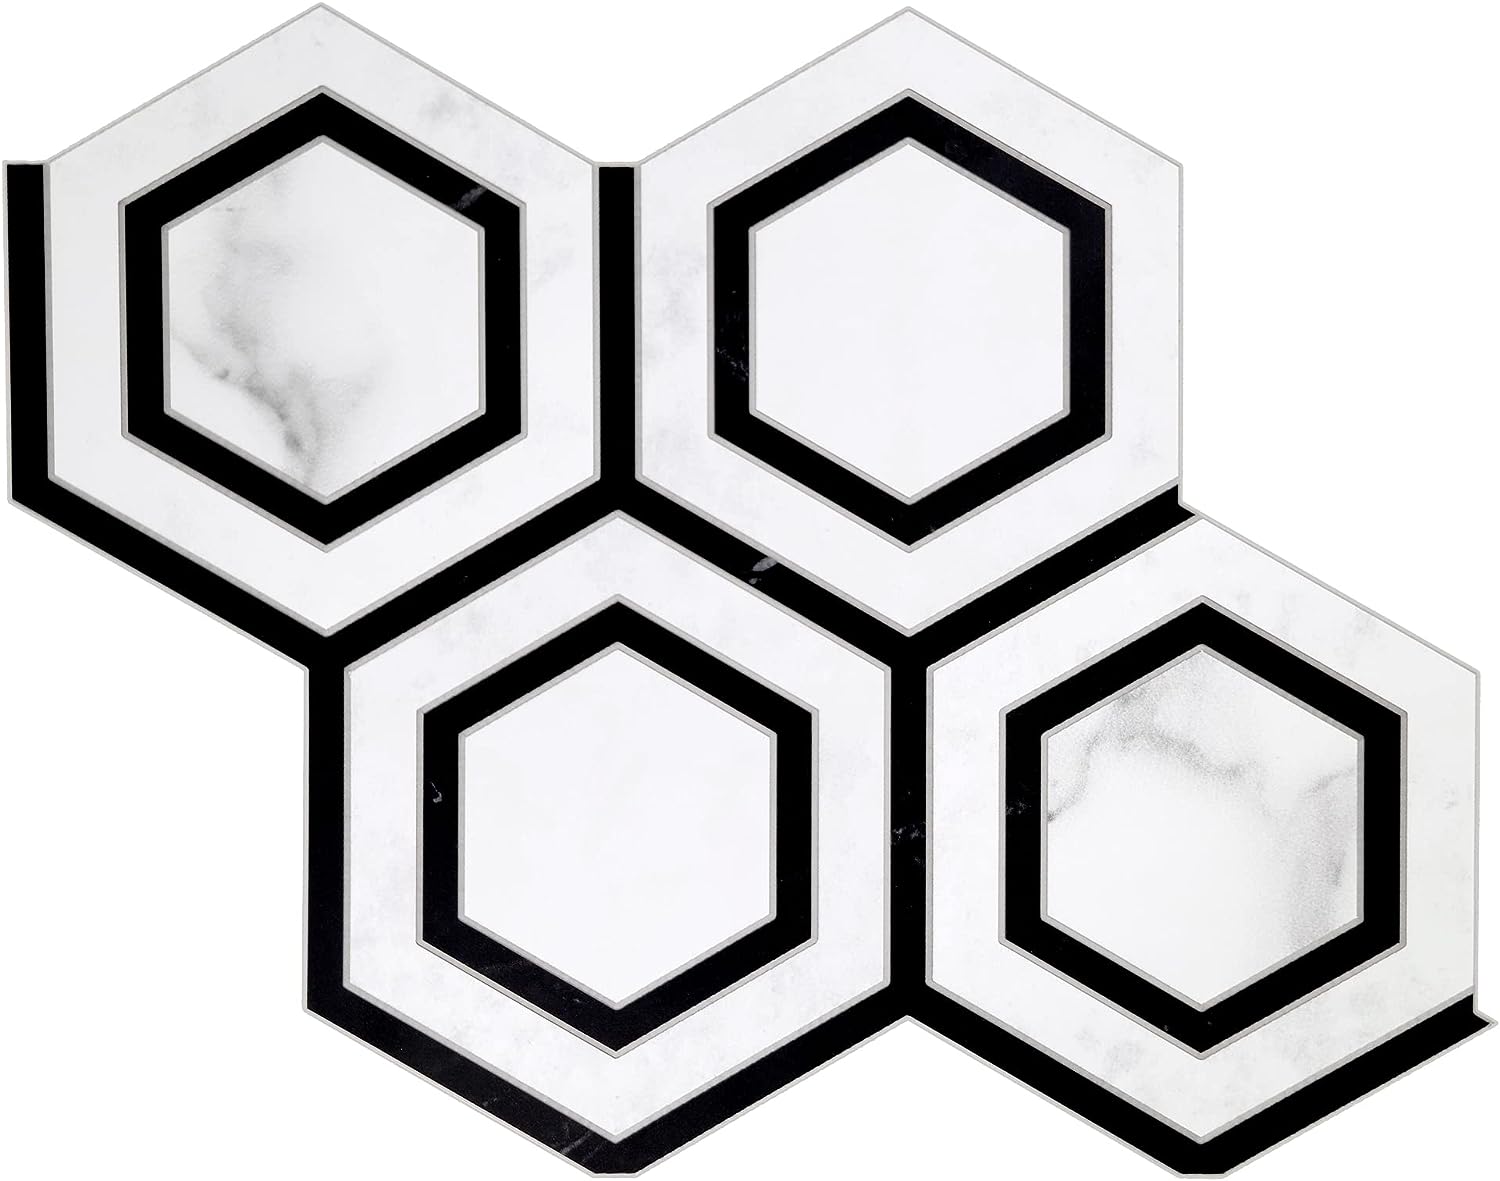 Hexagon Peel and Stick Backsplash